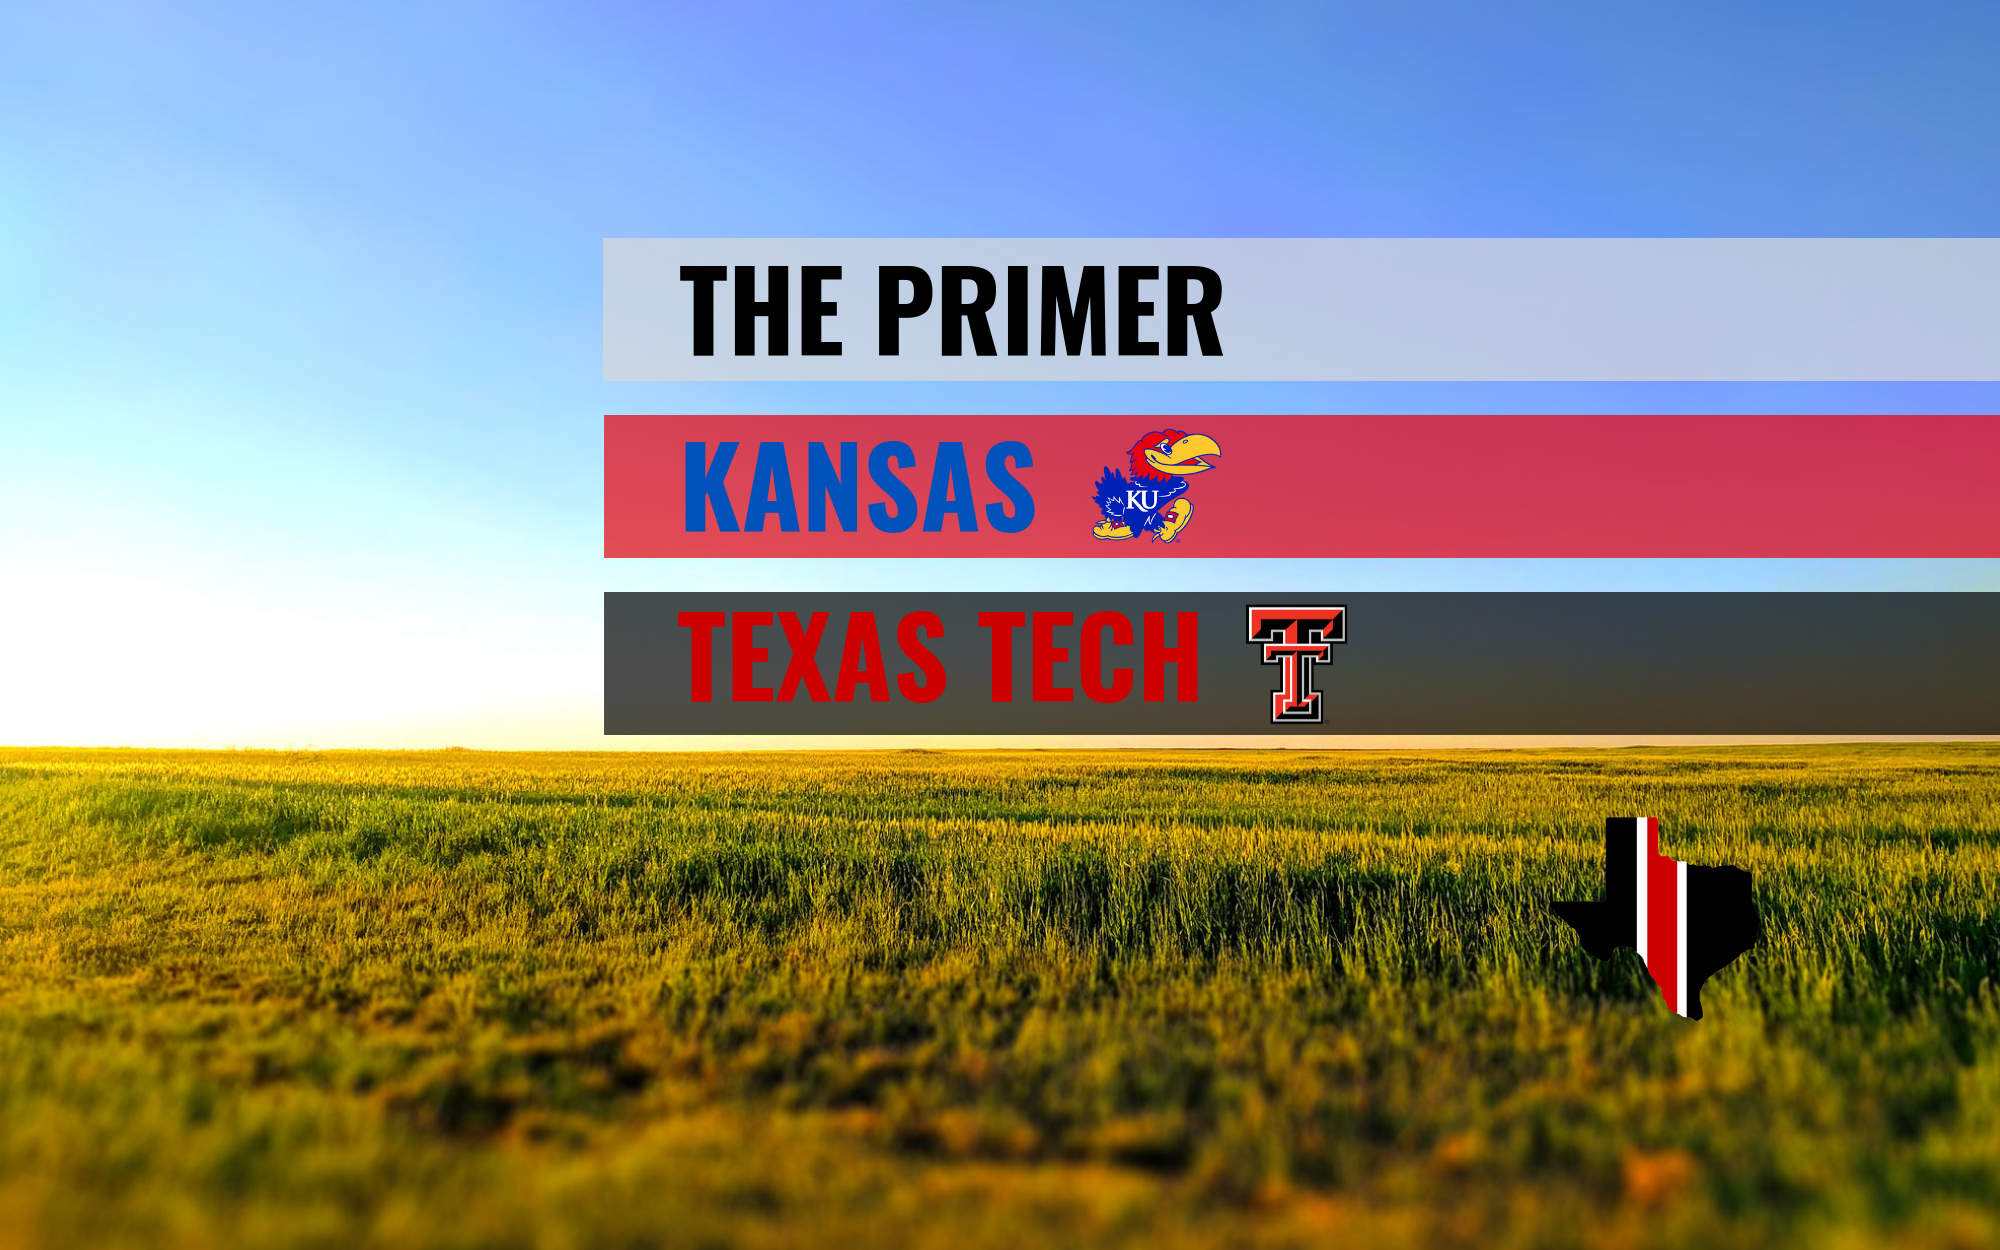 The Primer: Kansas Jayhawks vs. Texas Tech Red Raiders